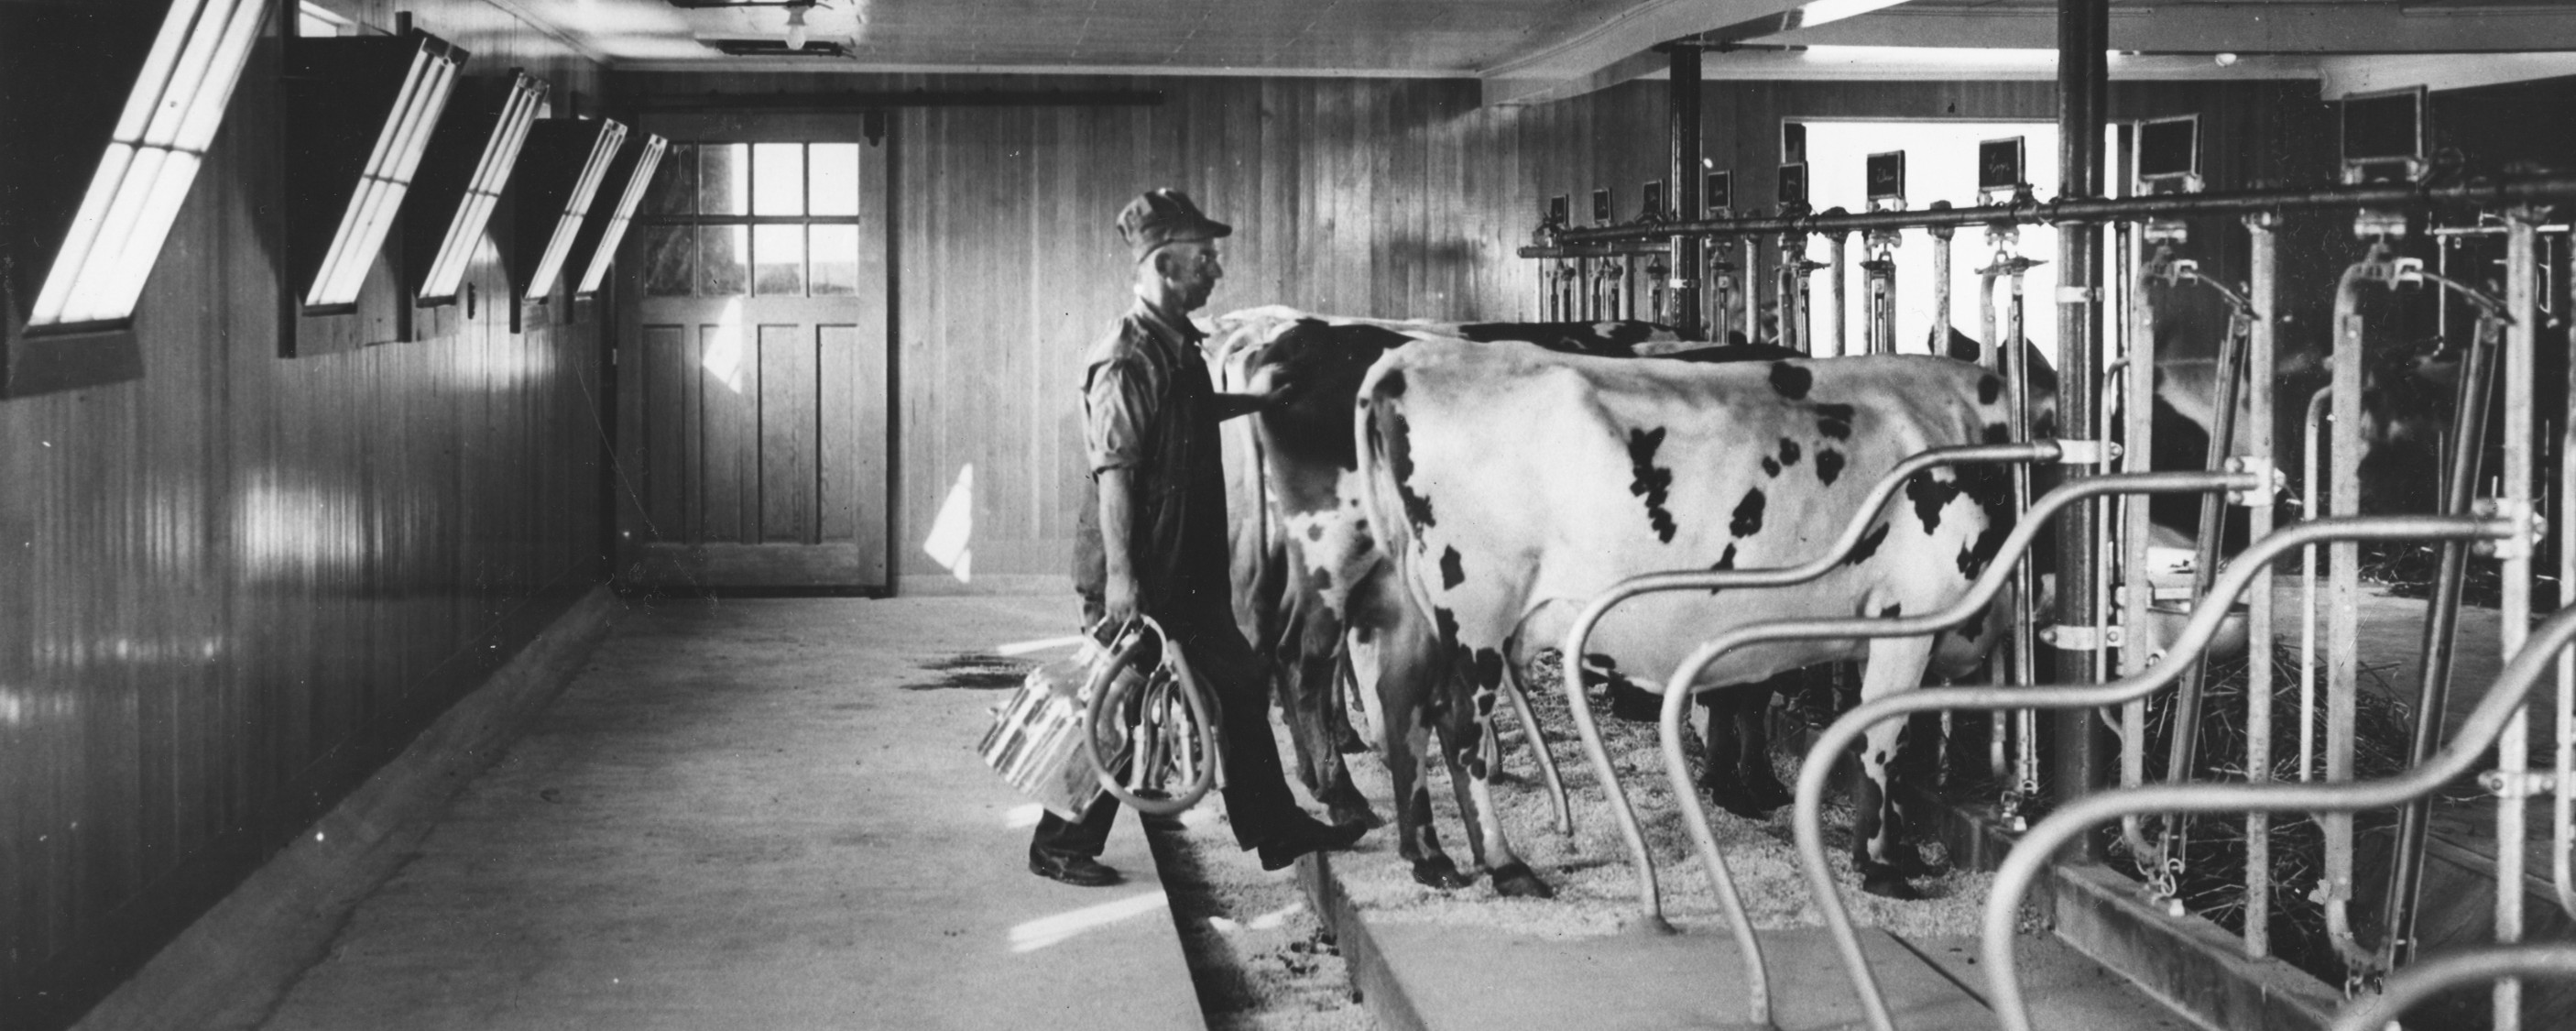 farmer milking cows in stalls